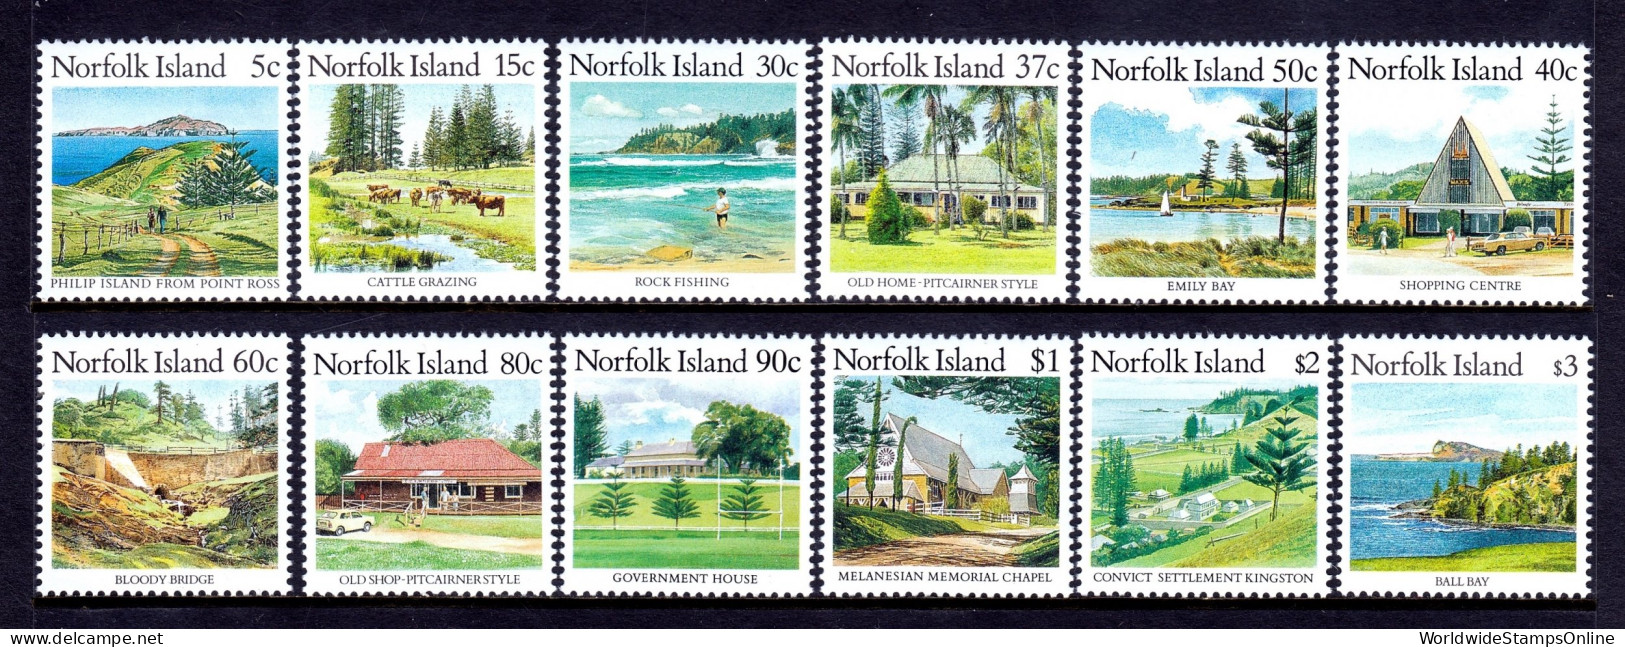 Norfolk Island - Scott #404//415 - MNH - Short Set, 1988 Issues Only - SCV $15 - Ile Norfolk